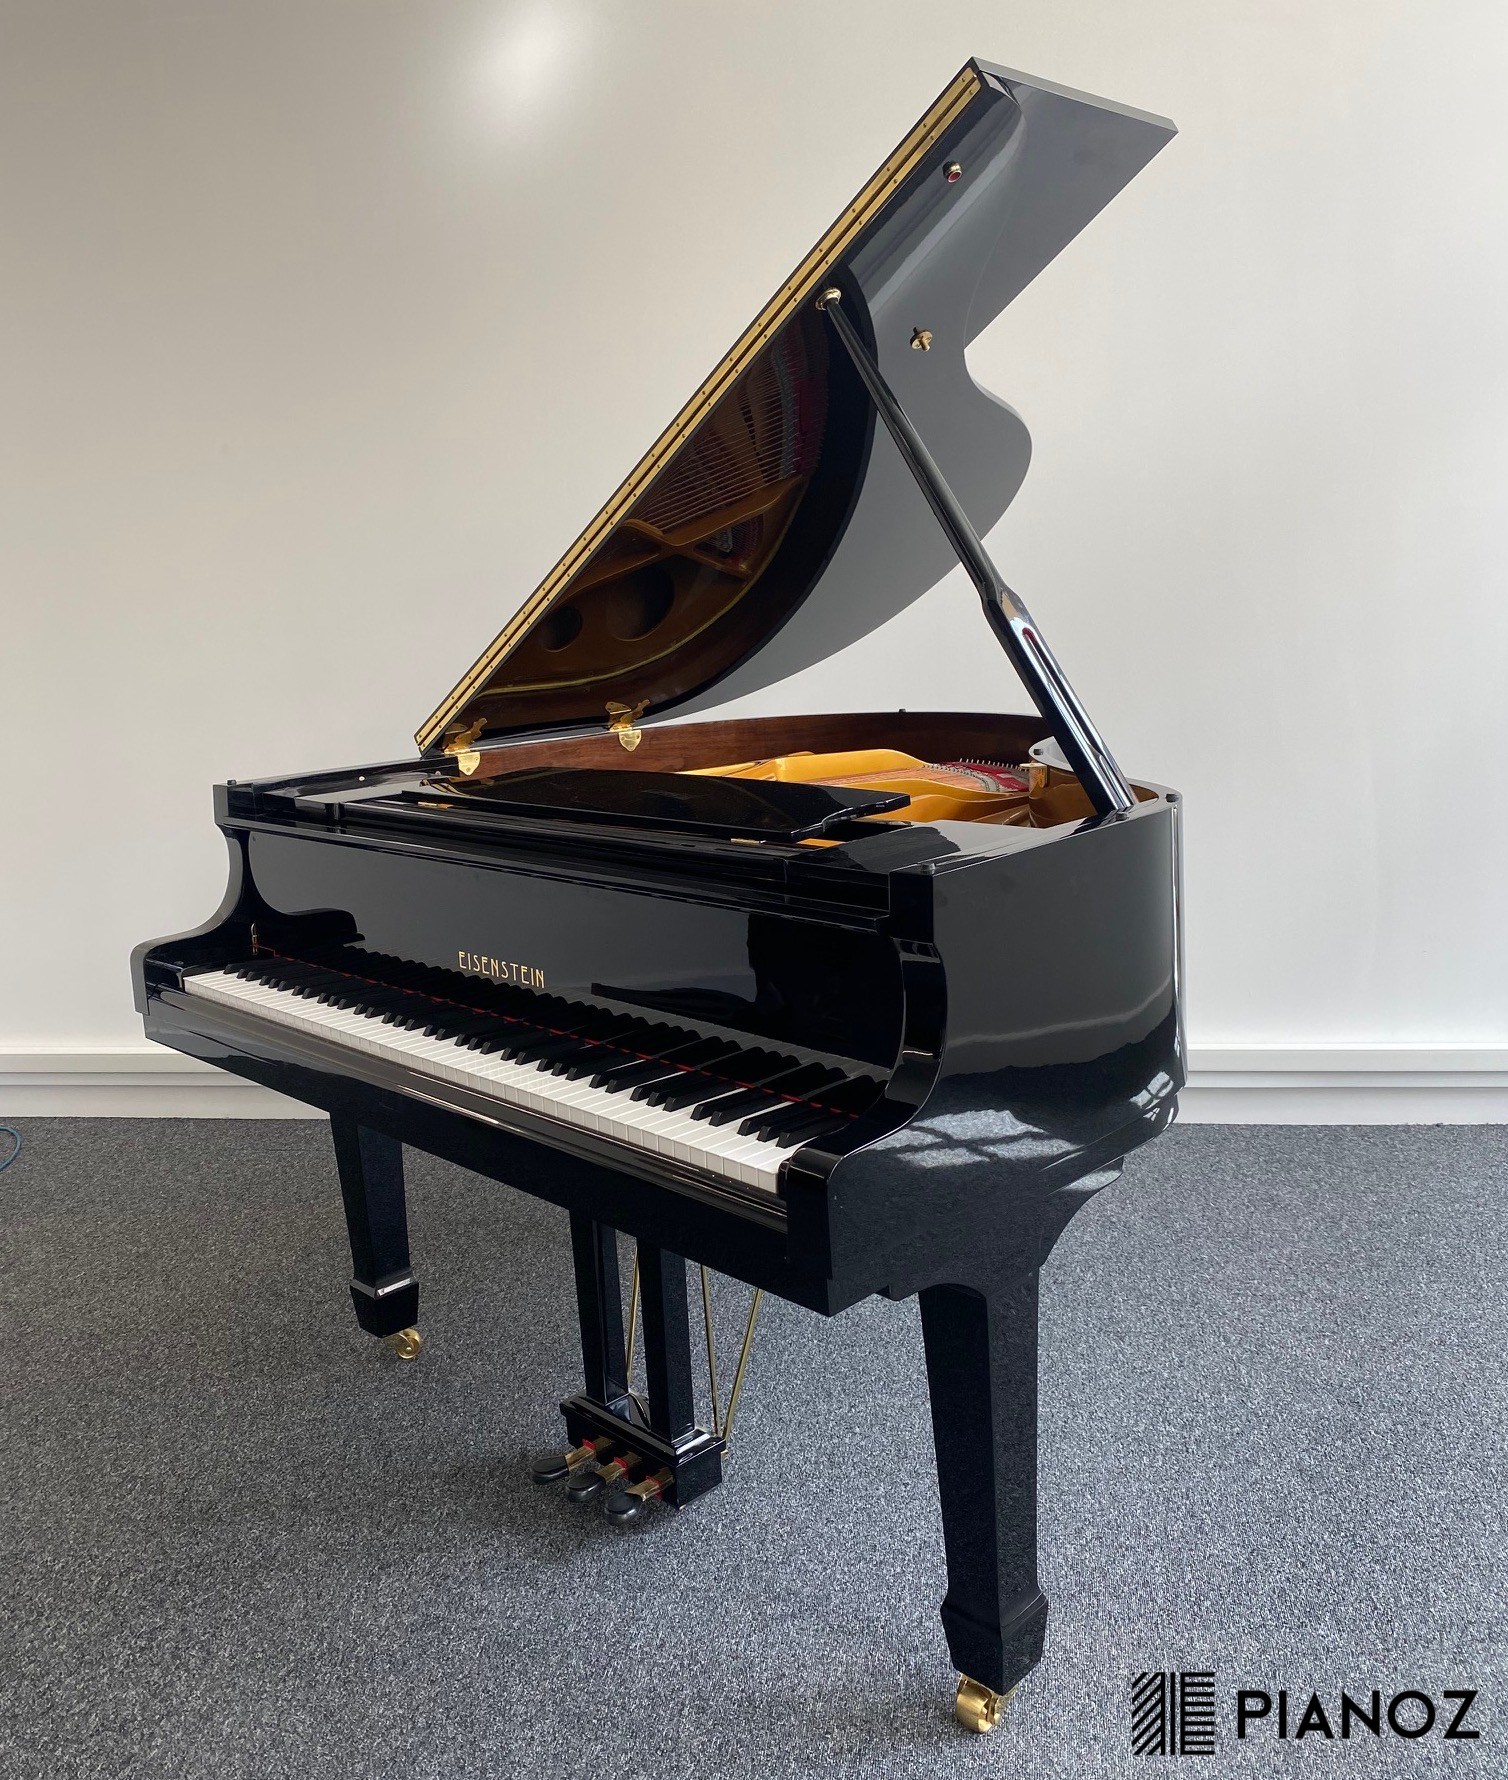 Steinhoven Eisenstein Baby Grand Piano piano for sale in UK